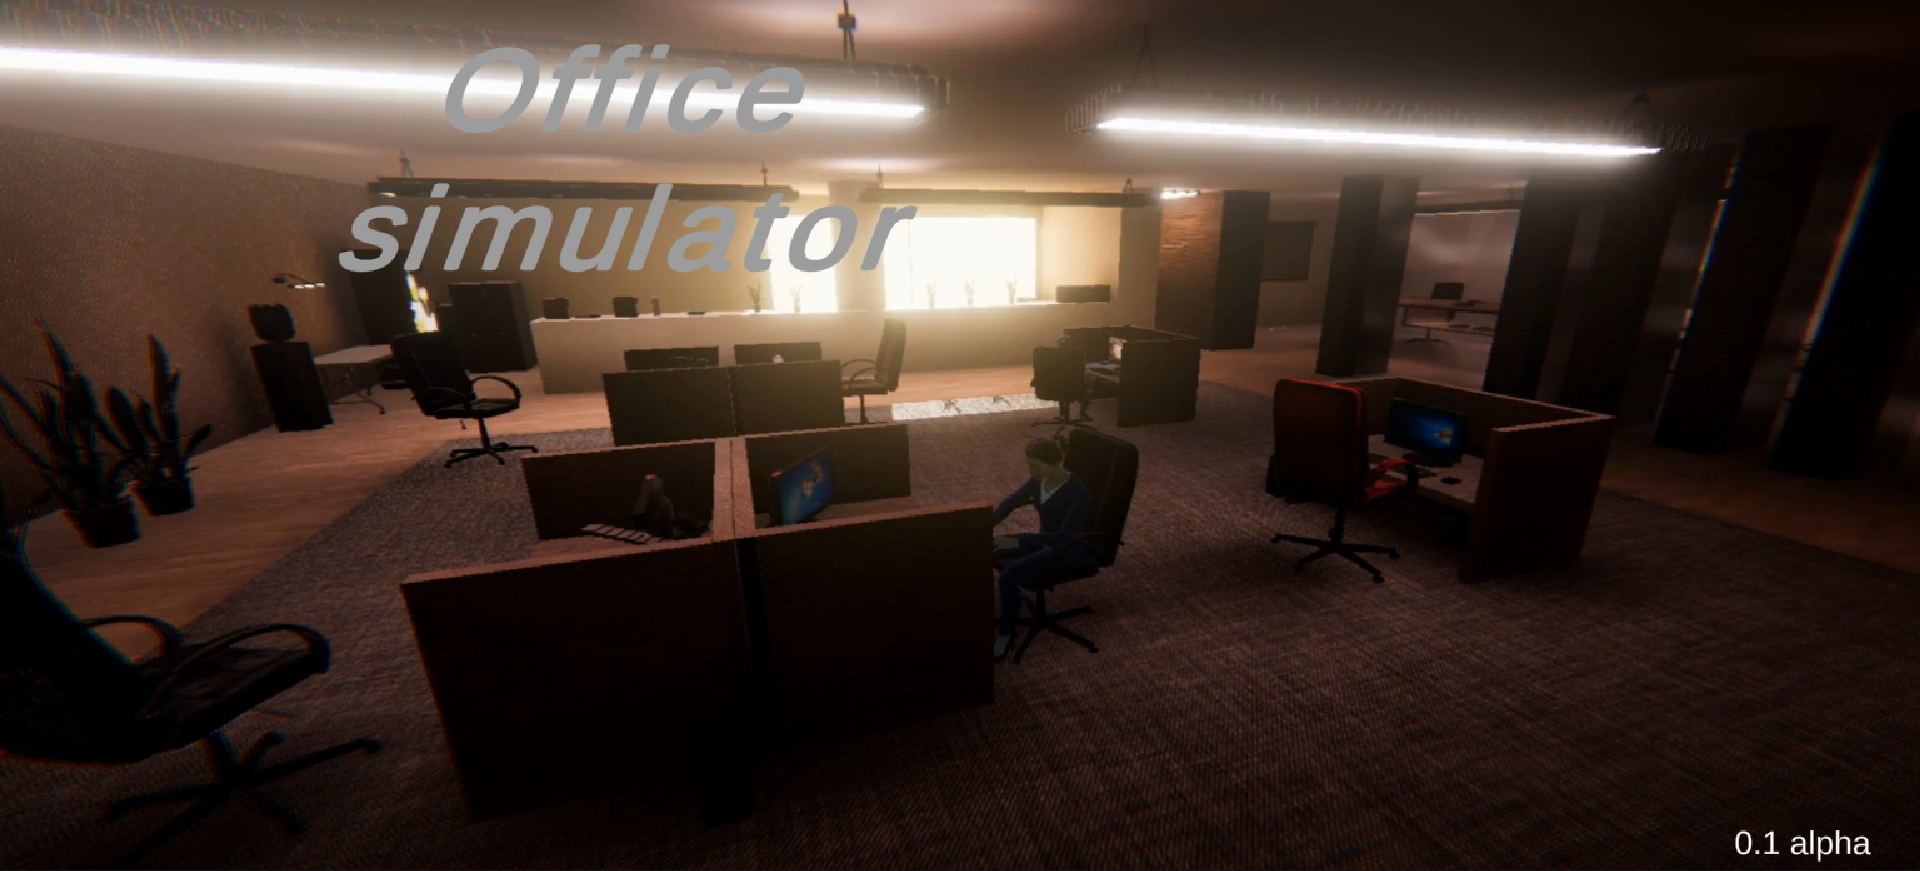 The office simulator